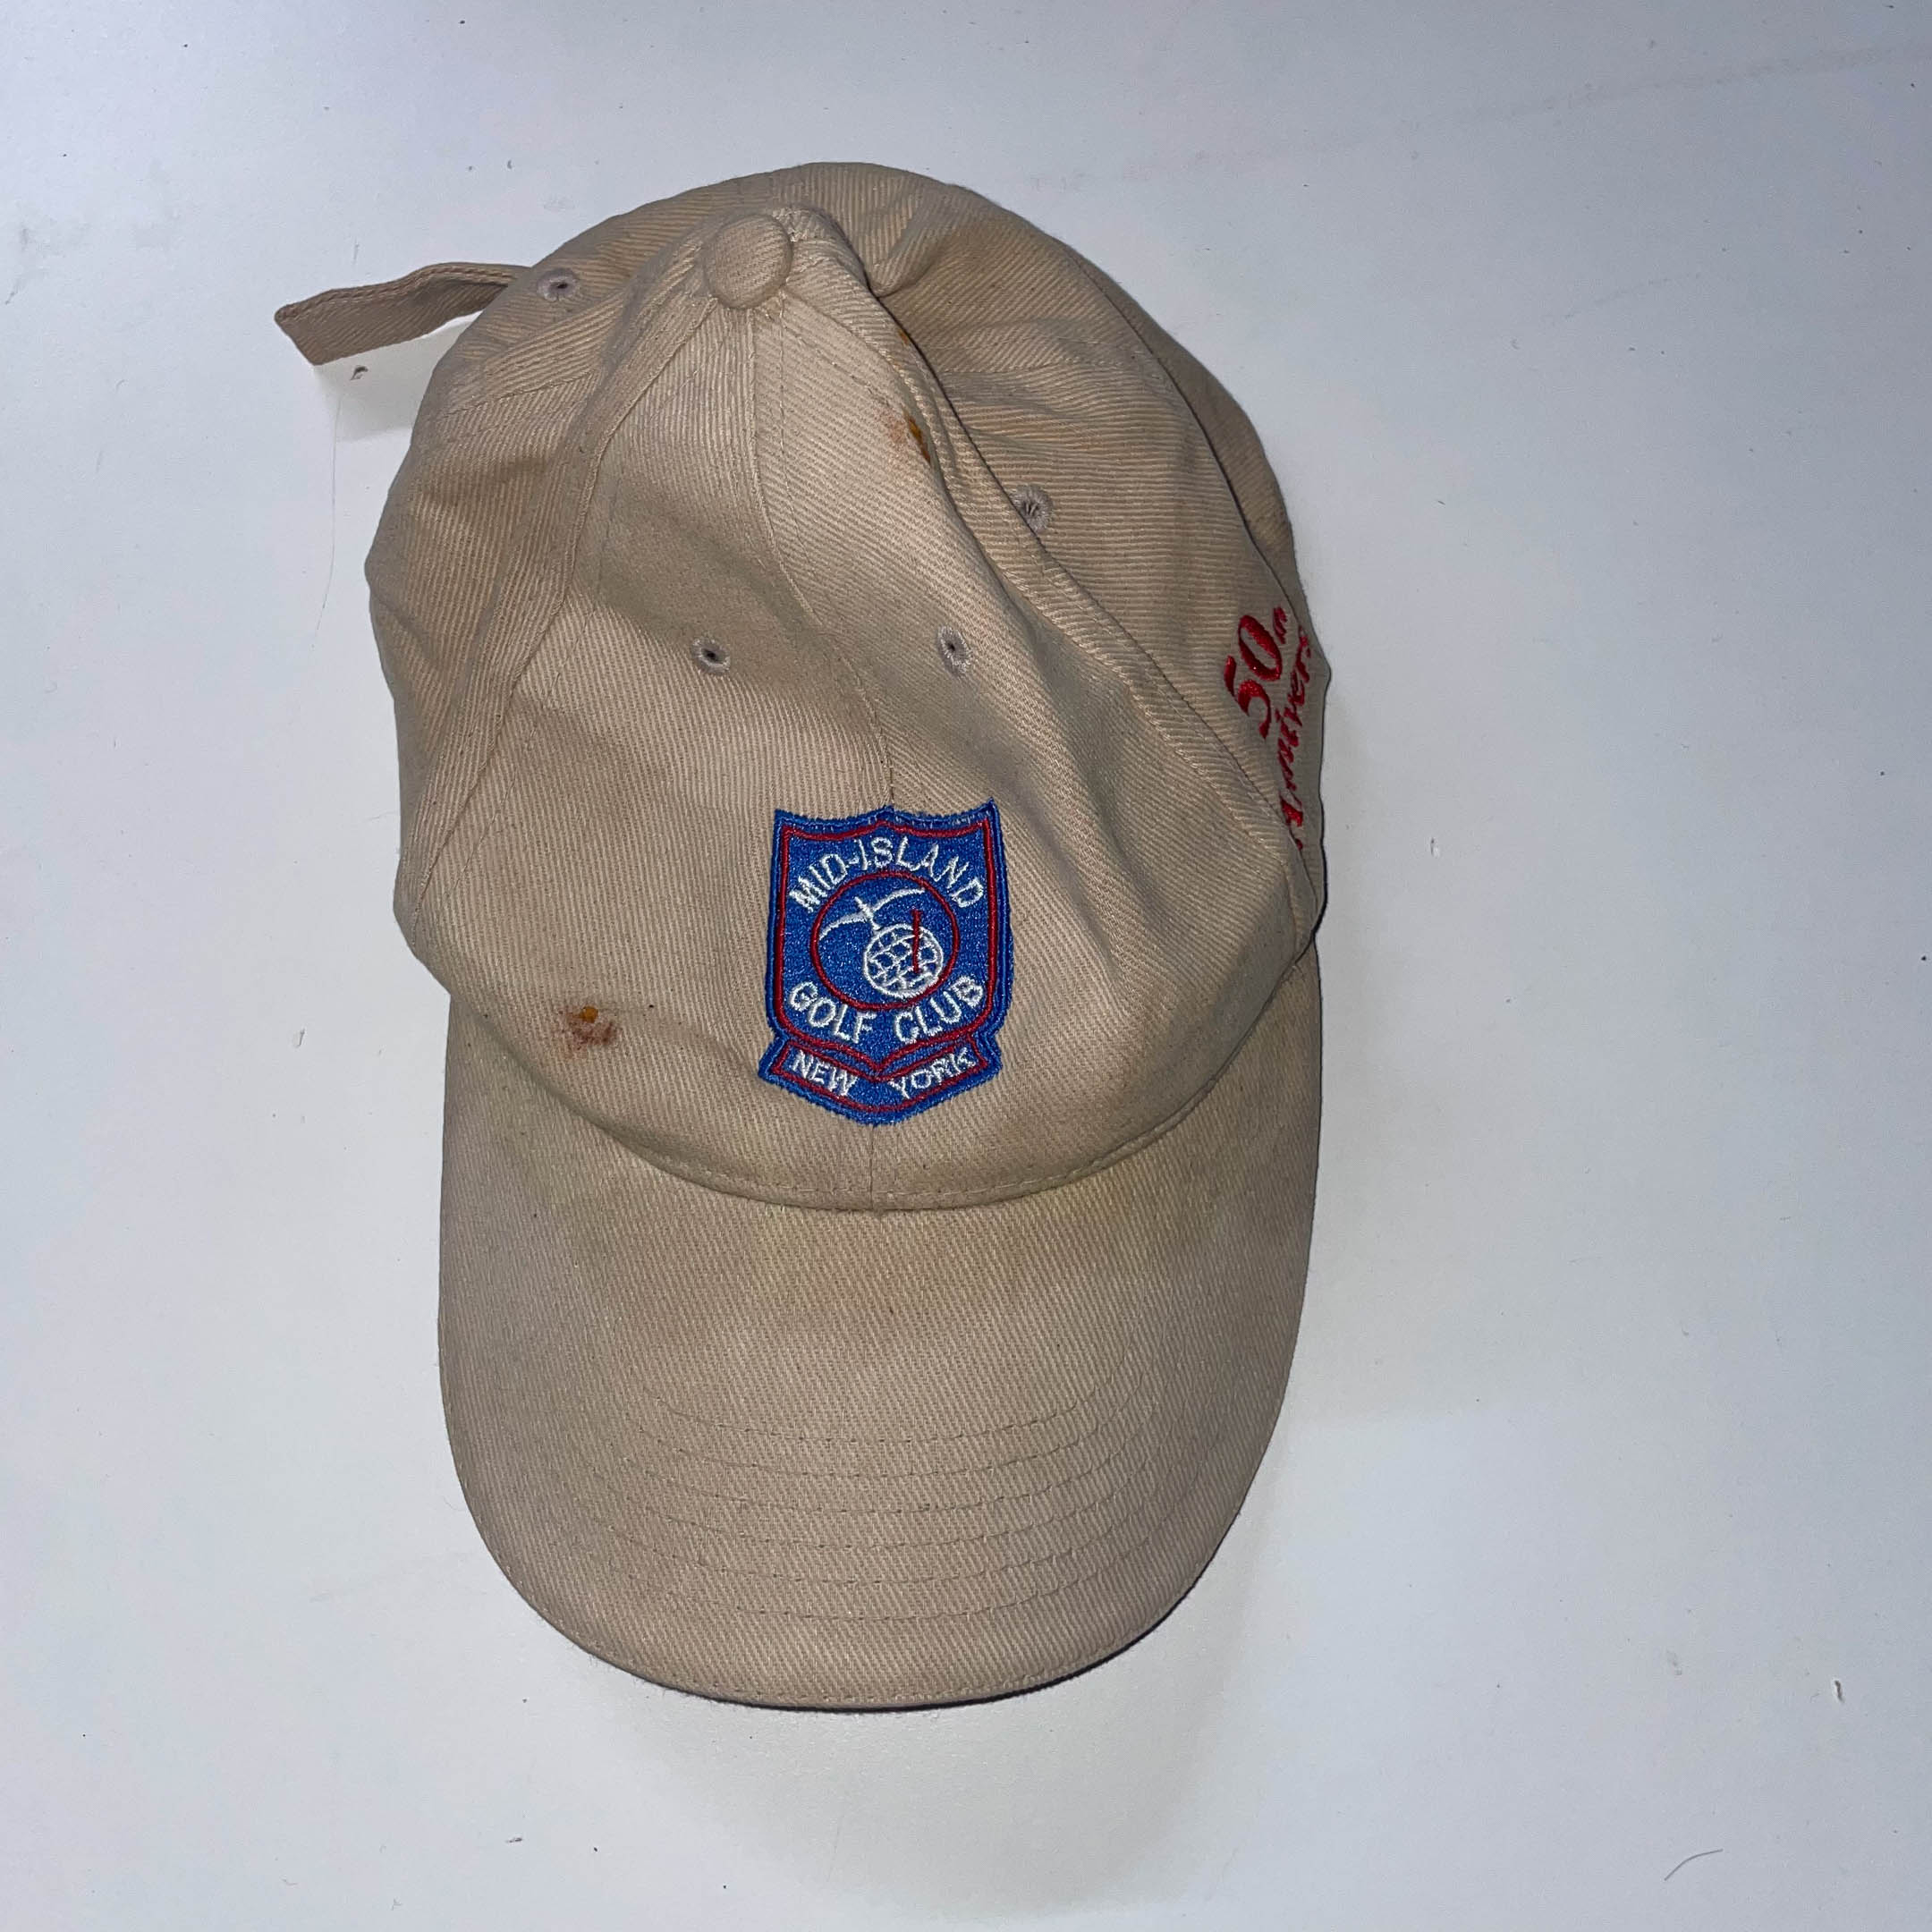 Vintage Mid island golf club Garyline cream baseball hat